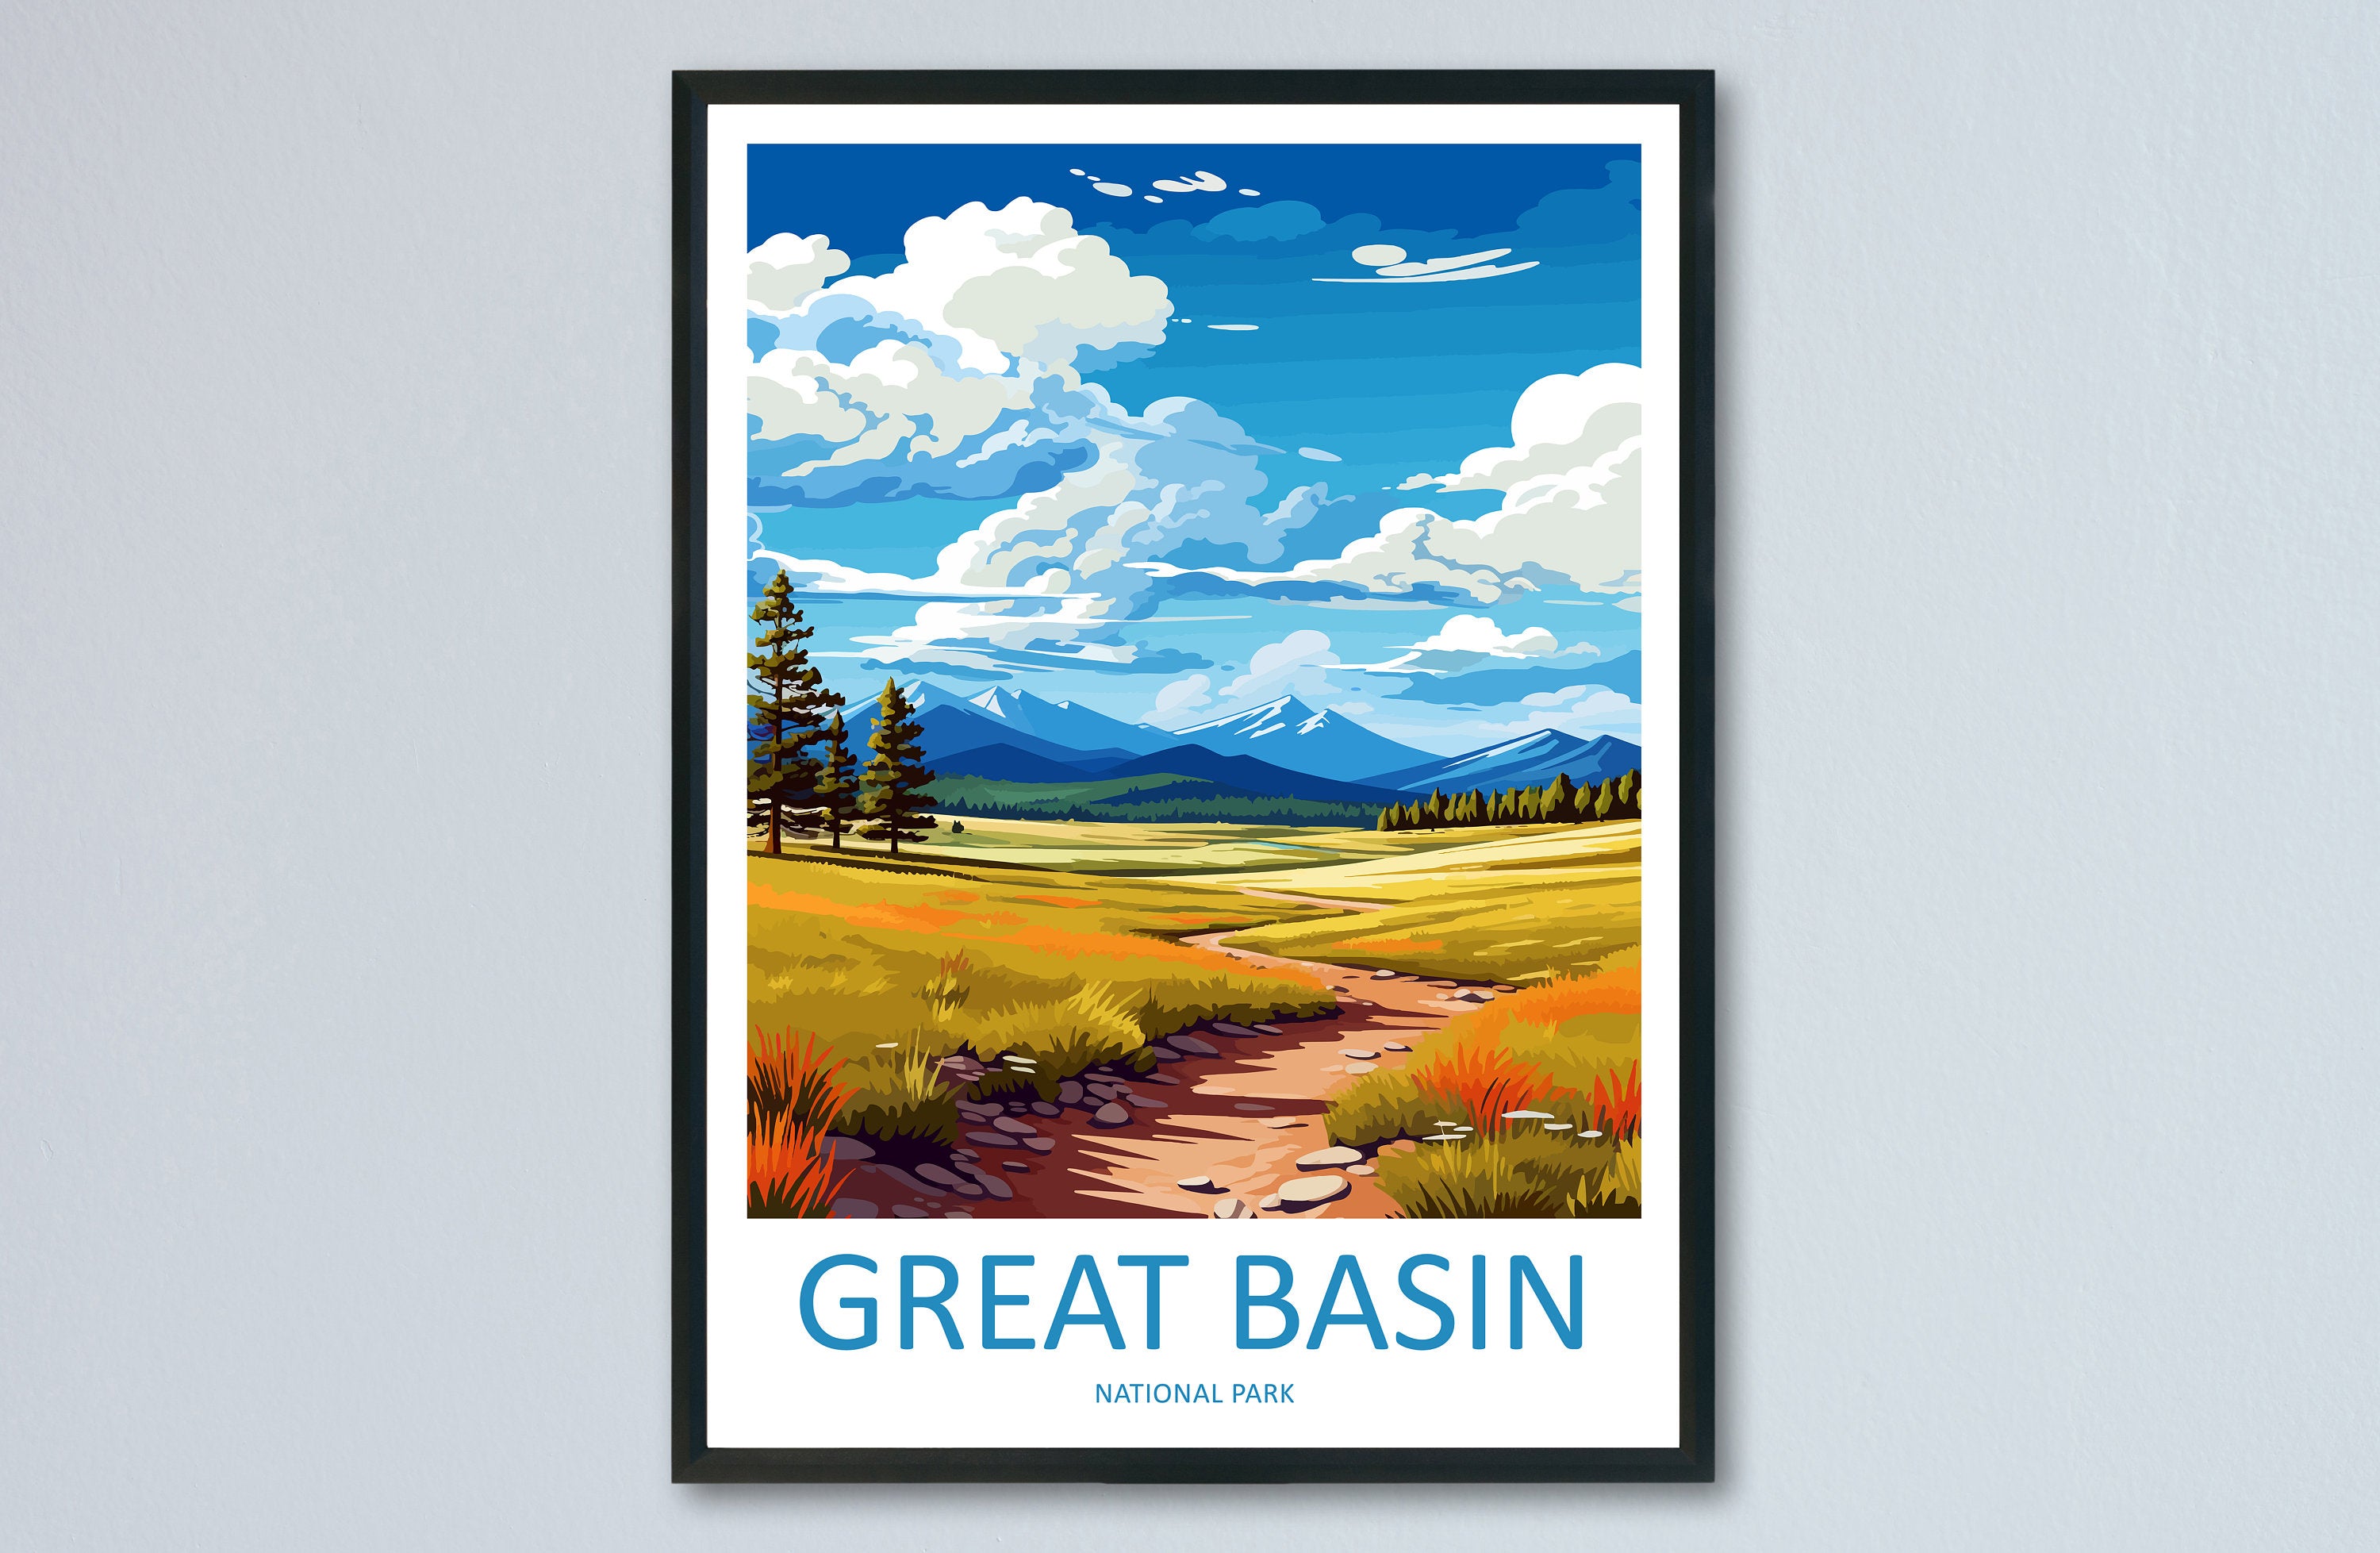 Great Basin National Park Travel Print Wall Art Great Basin National Park Wall Hanging Home Décor Great Basin National Park Gift Art